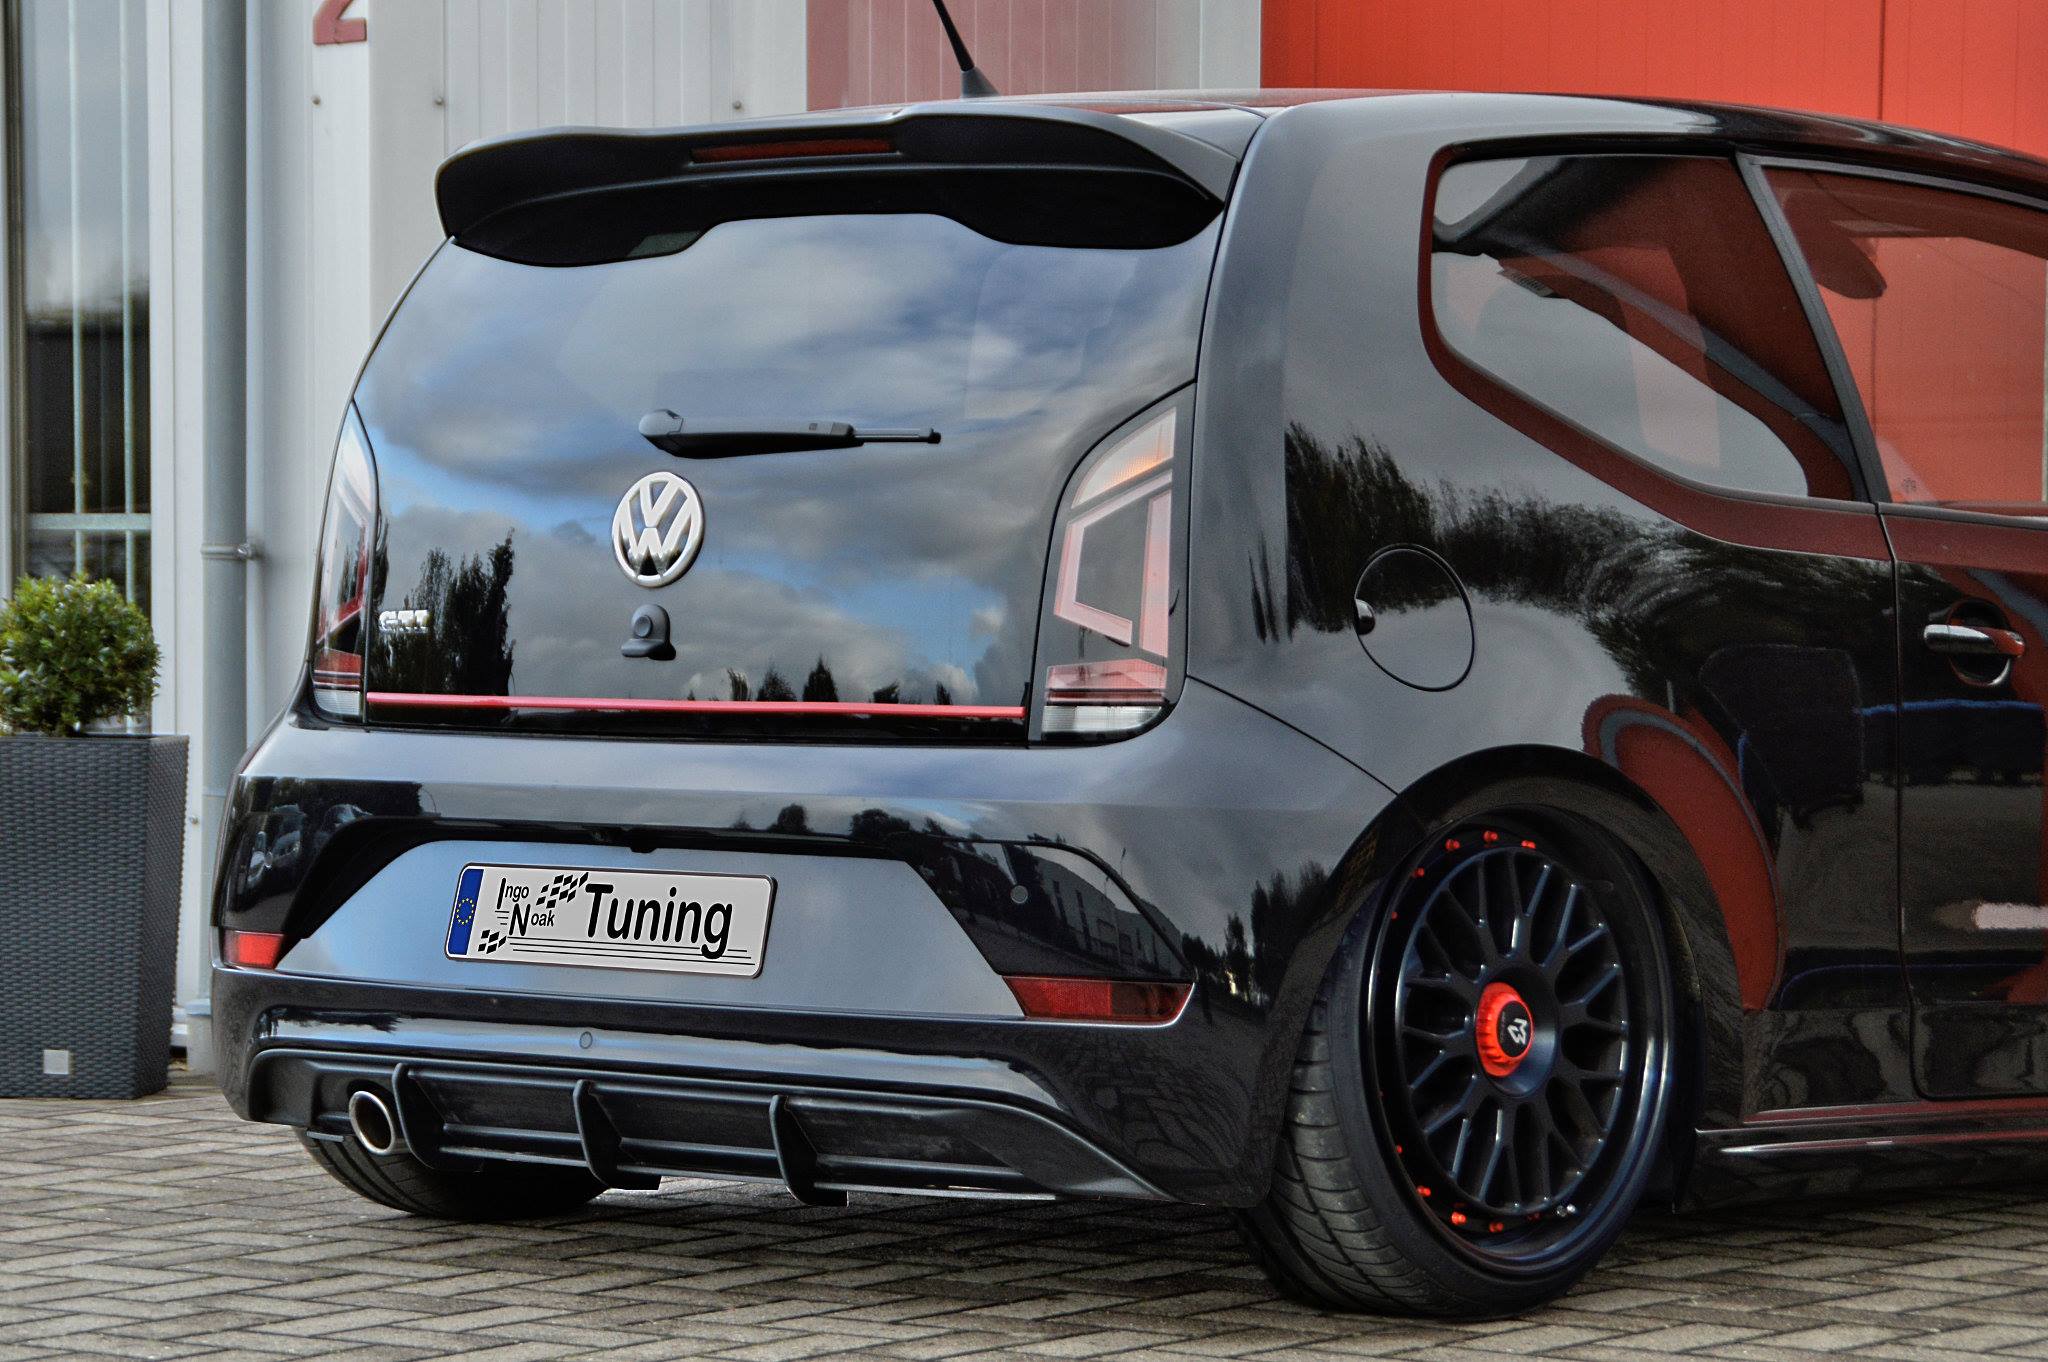 VW Up! GTI Looks Angry With Ingo Noak Body Kit - autoevolution